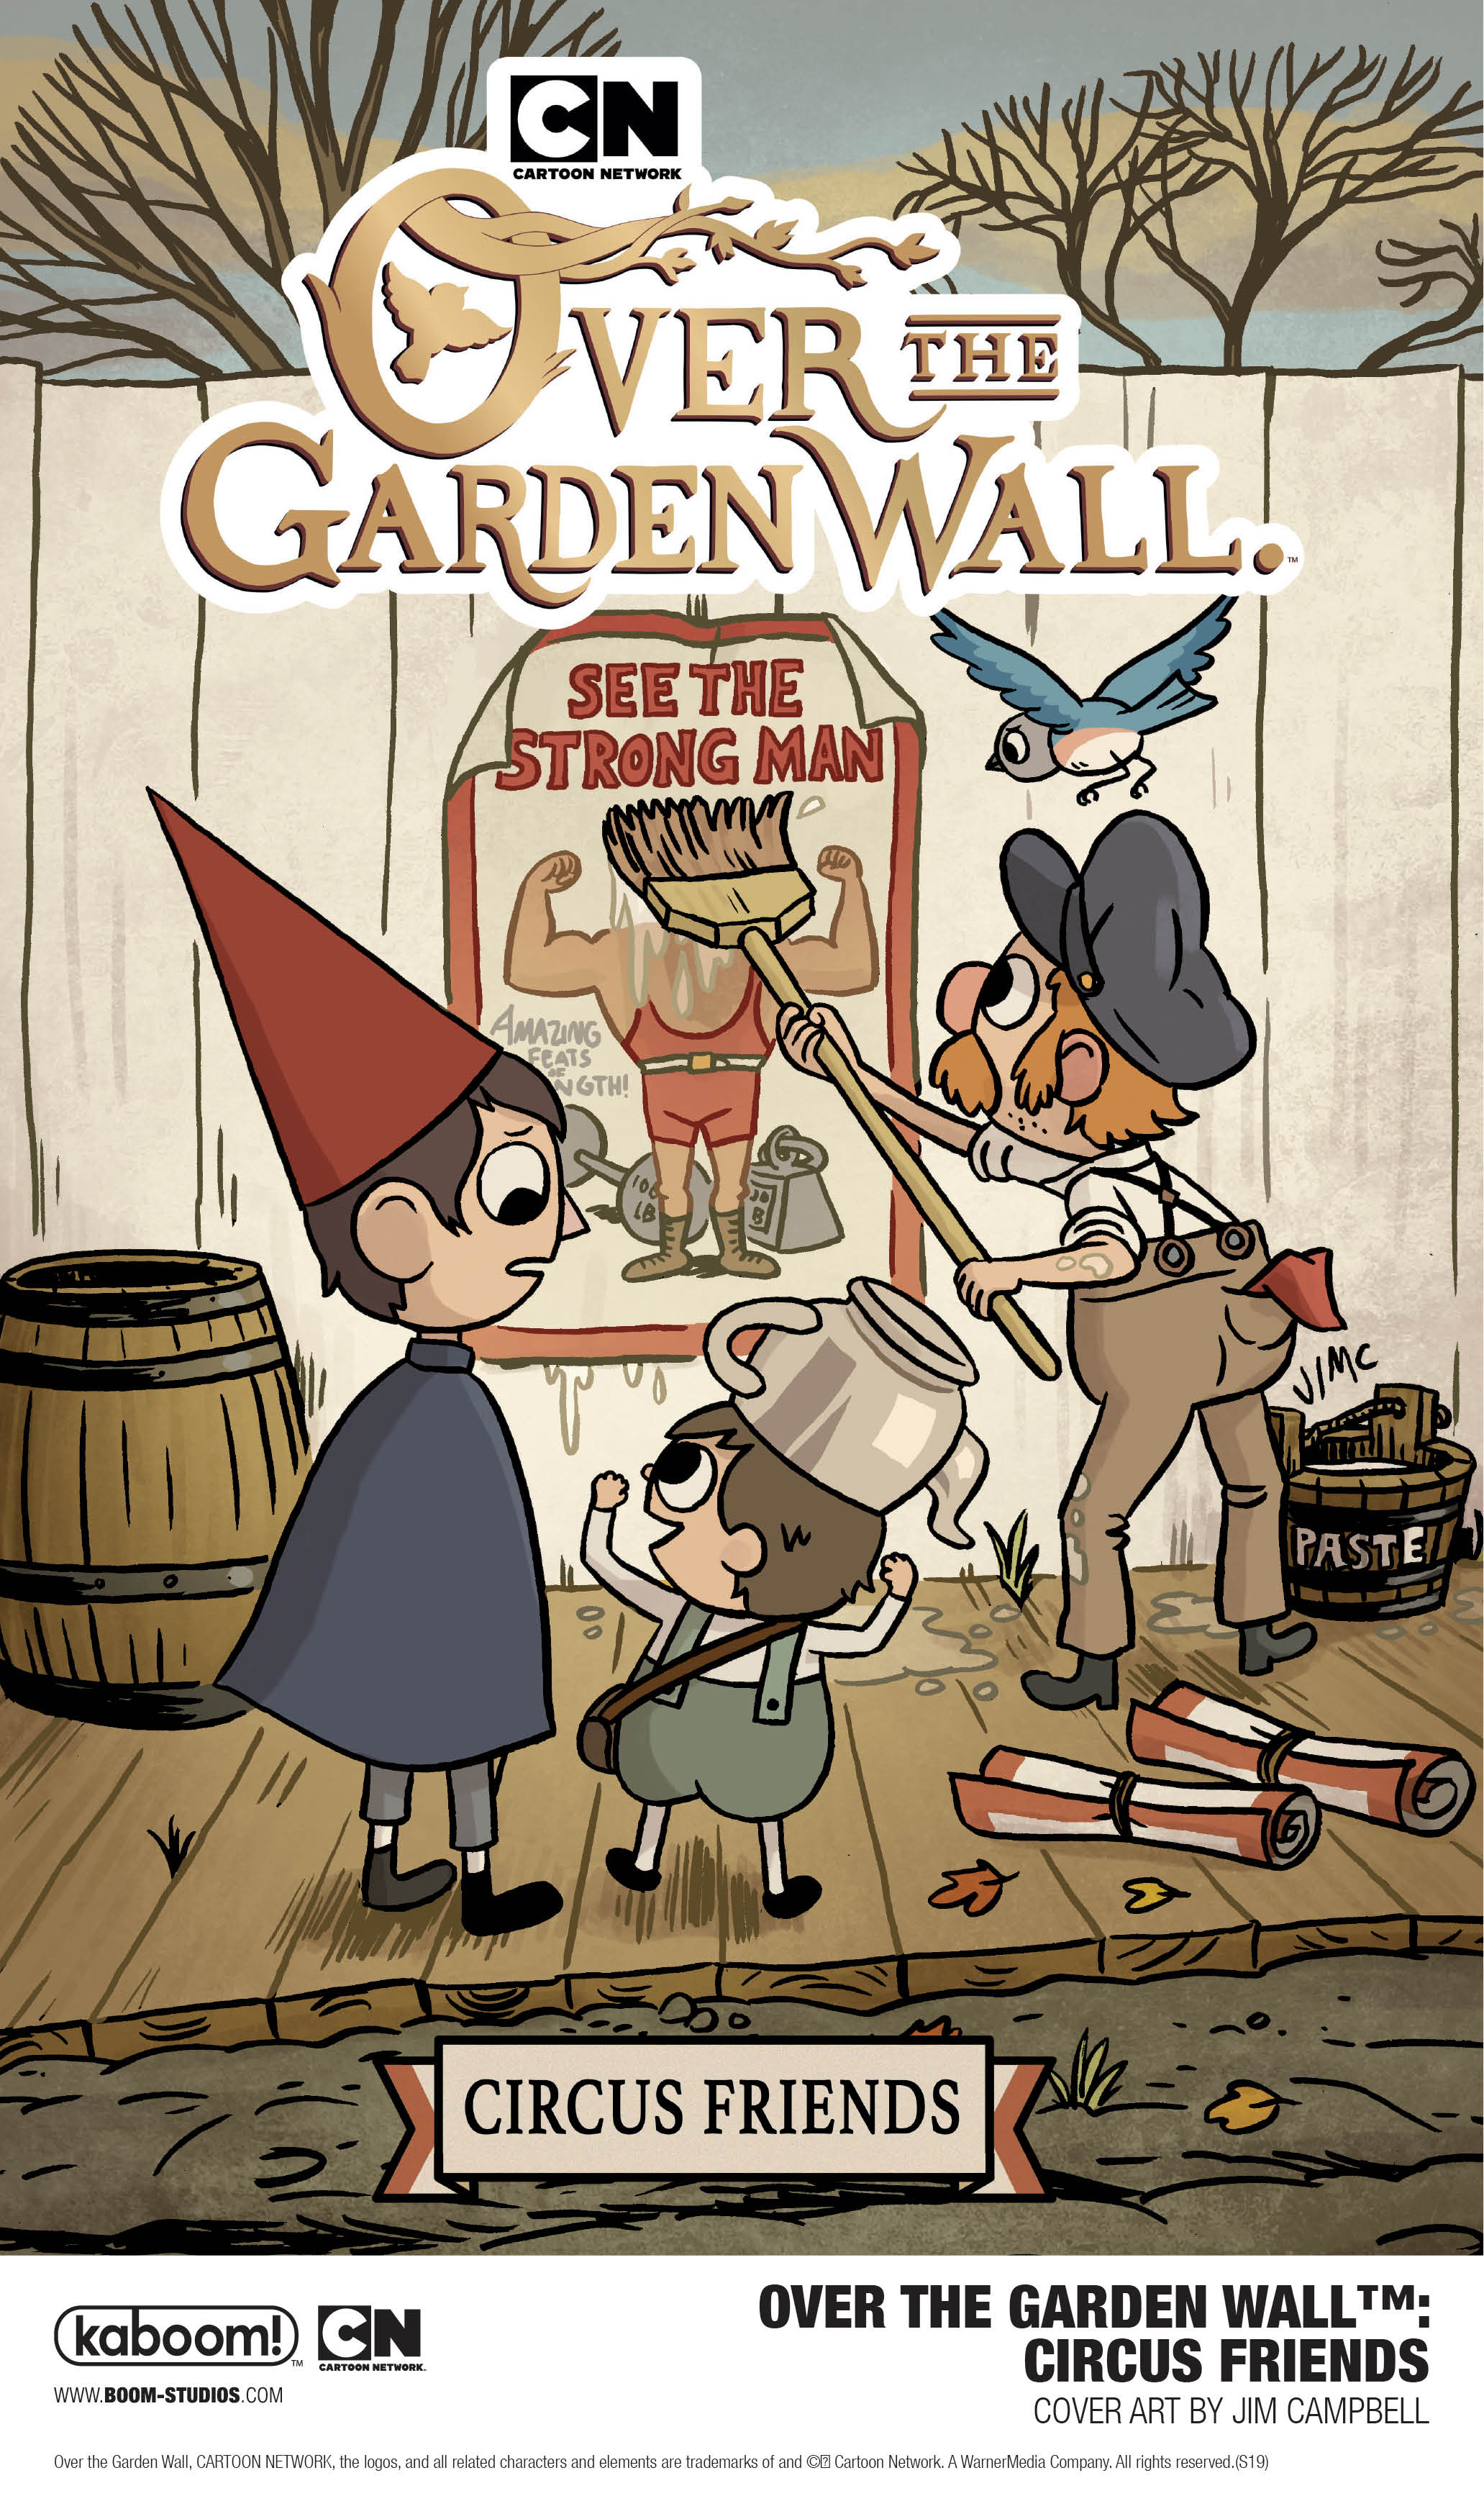 Over the Garden Wall: Circus Friends cover art